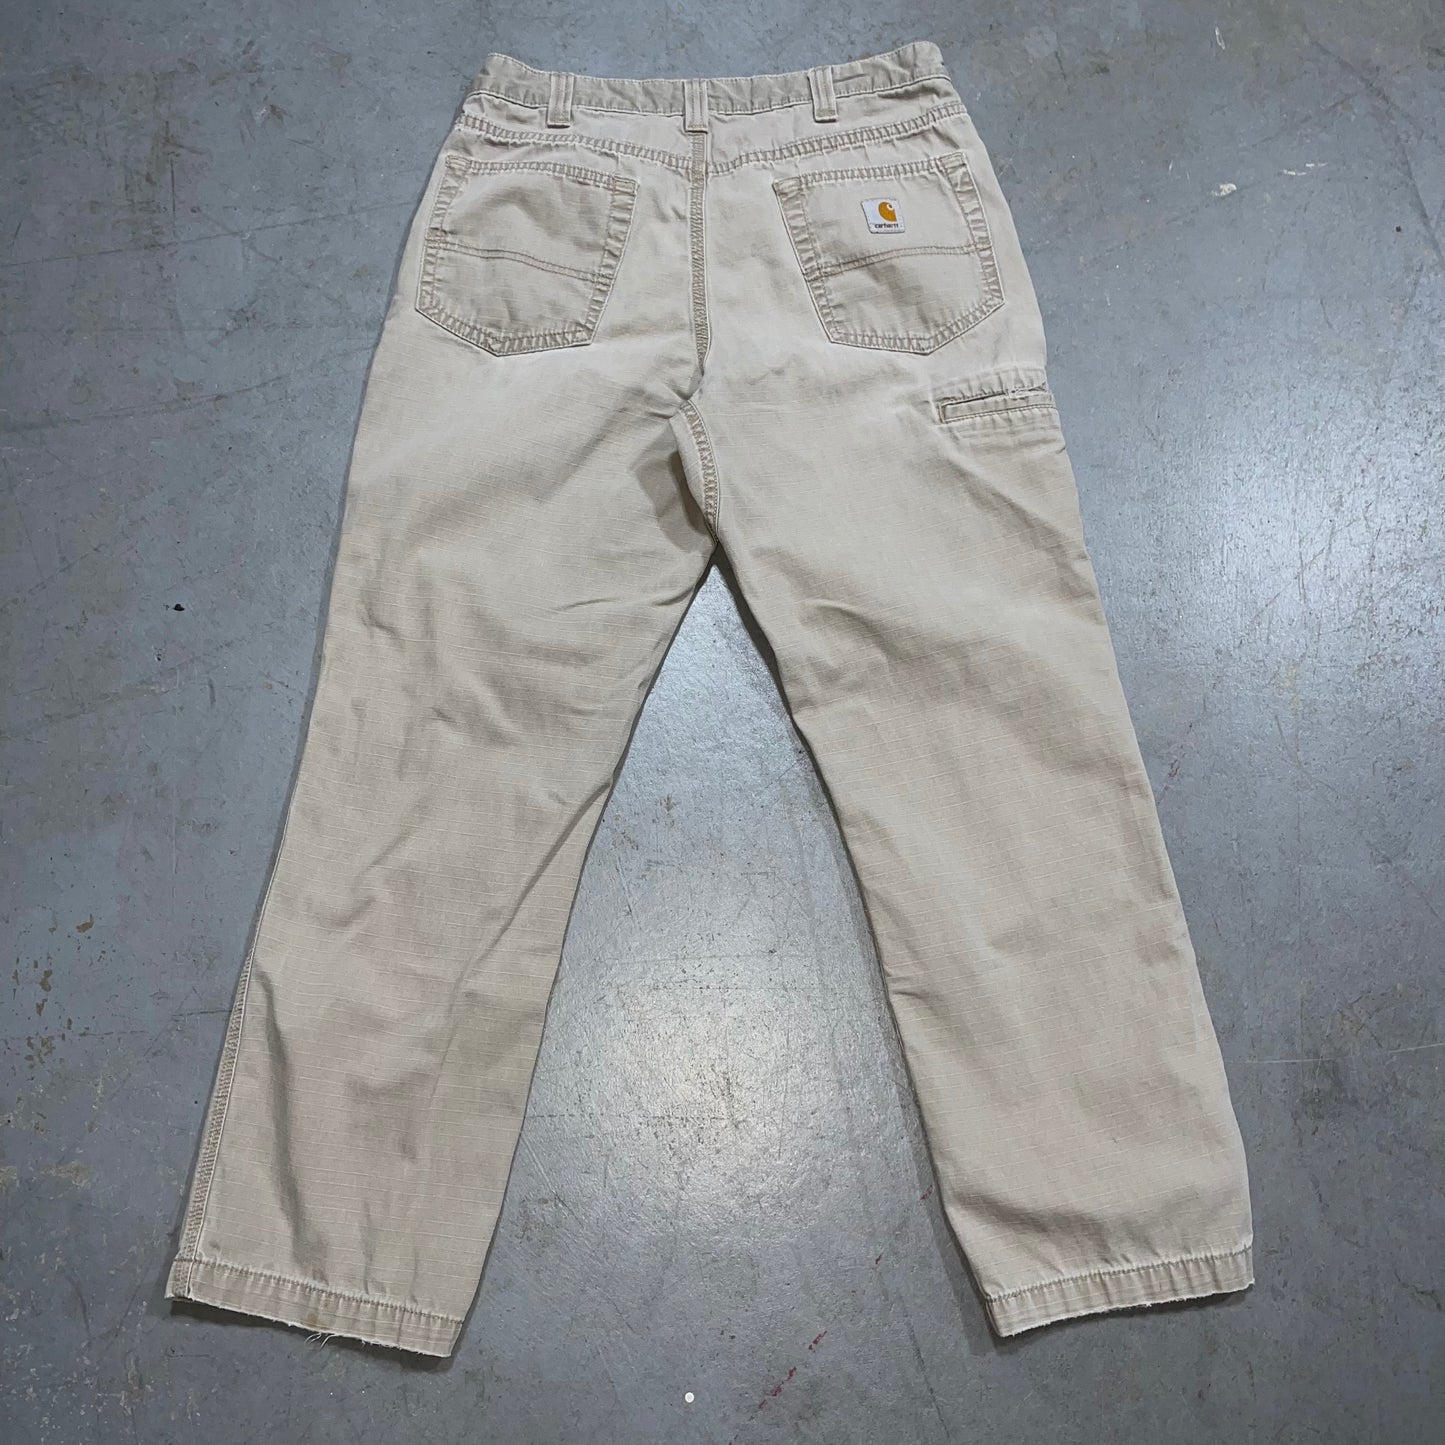 Carhartt Carpenter Pants. Size 32